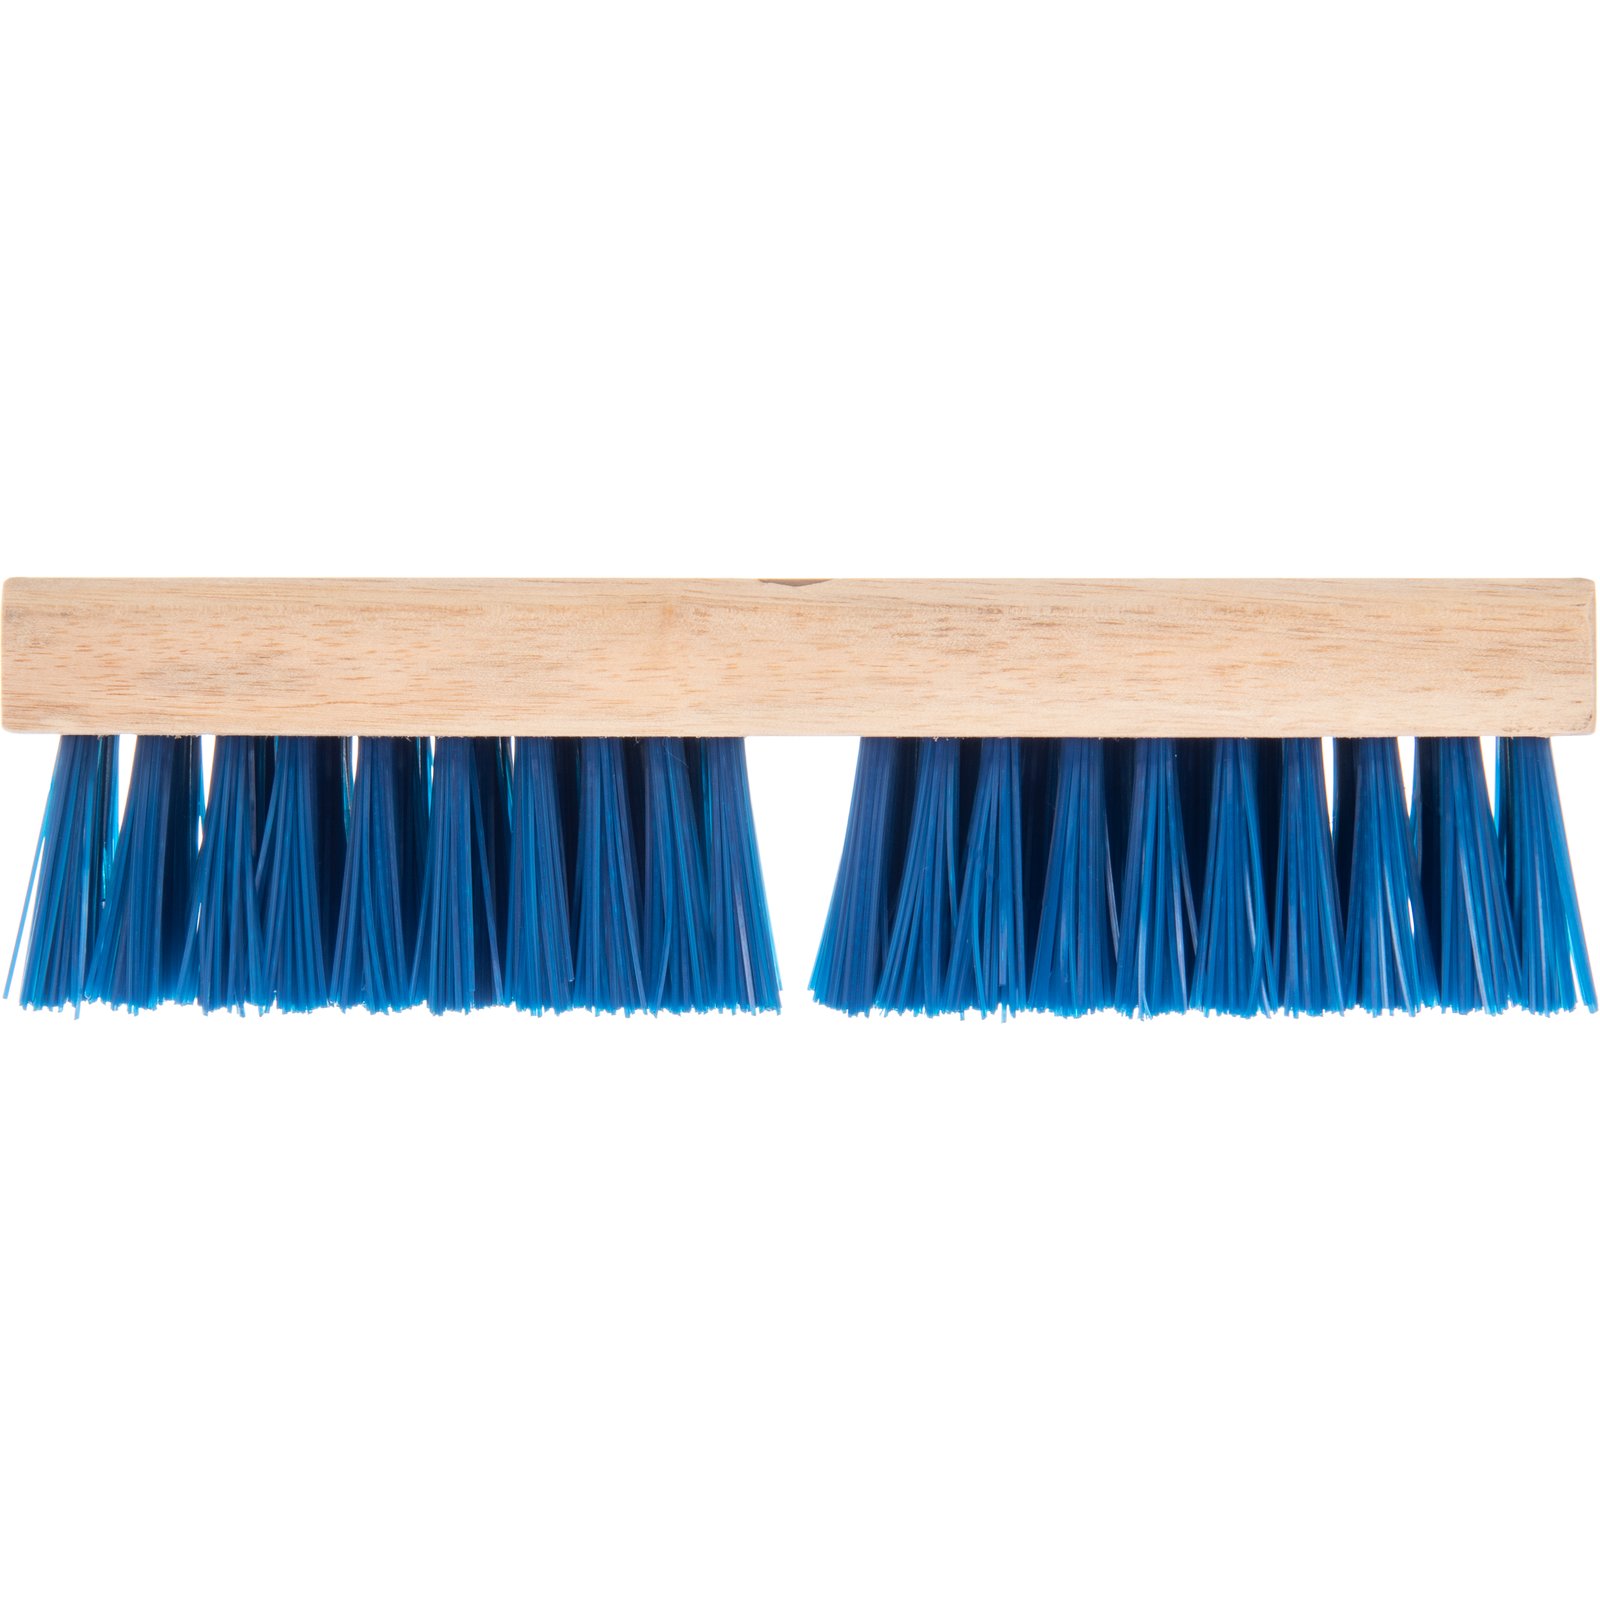 SWOPT 10-in Nylon Stiff Deck Brush in the Deck Brushes department